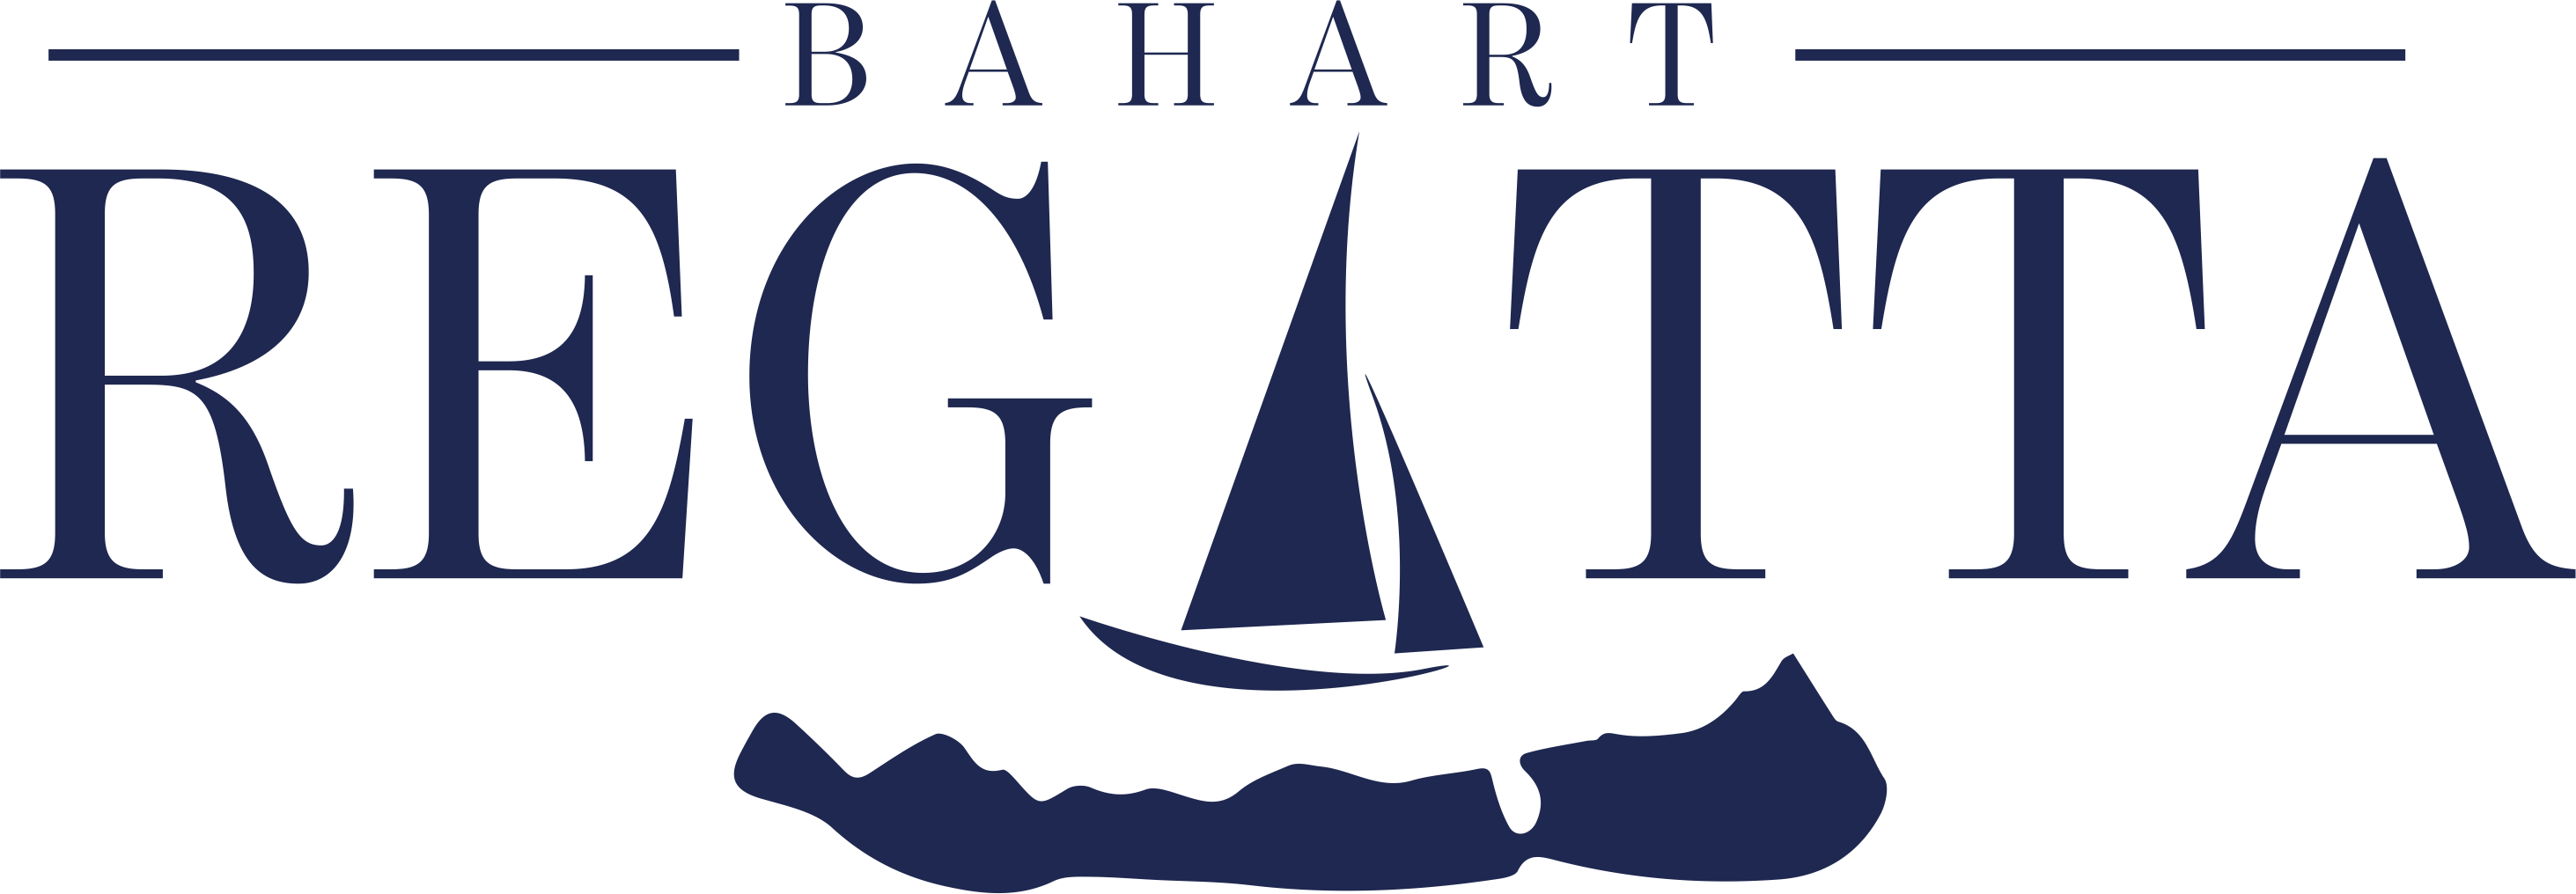 Bahart Regatta